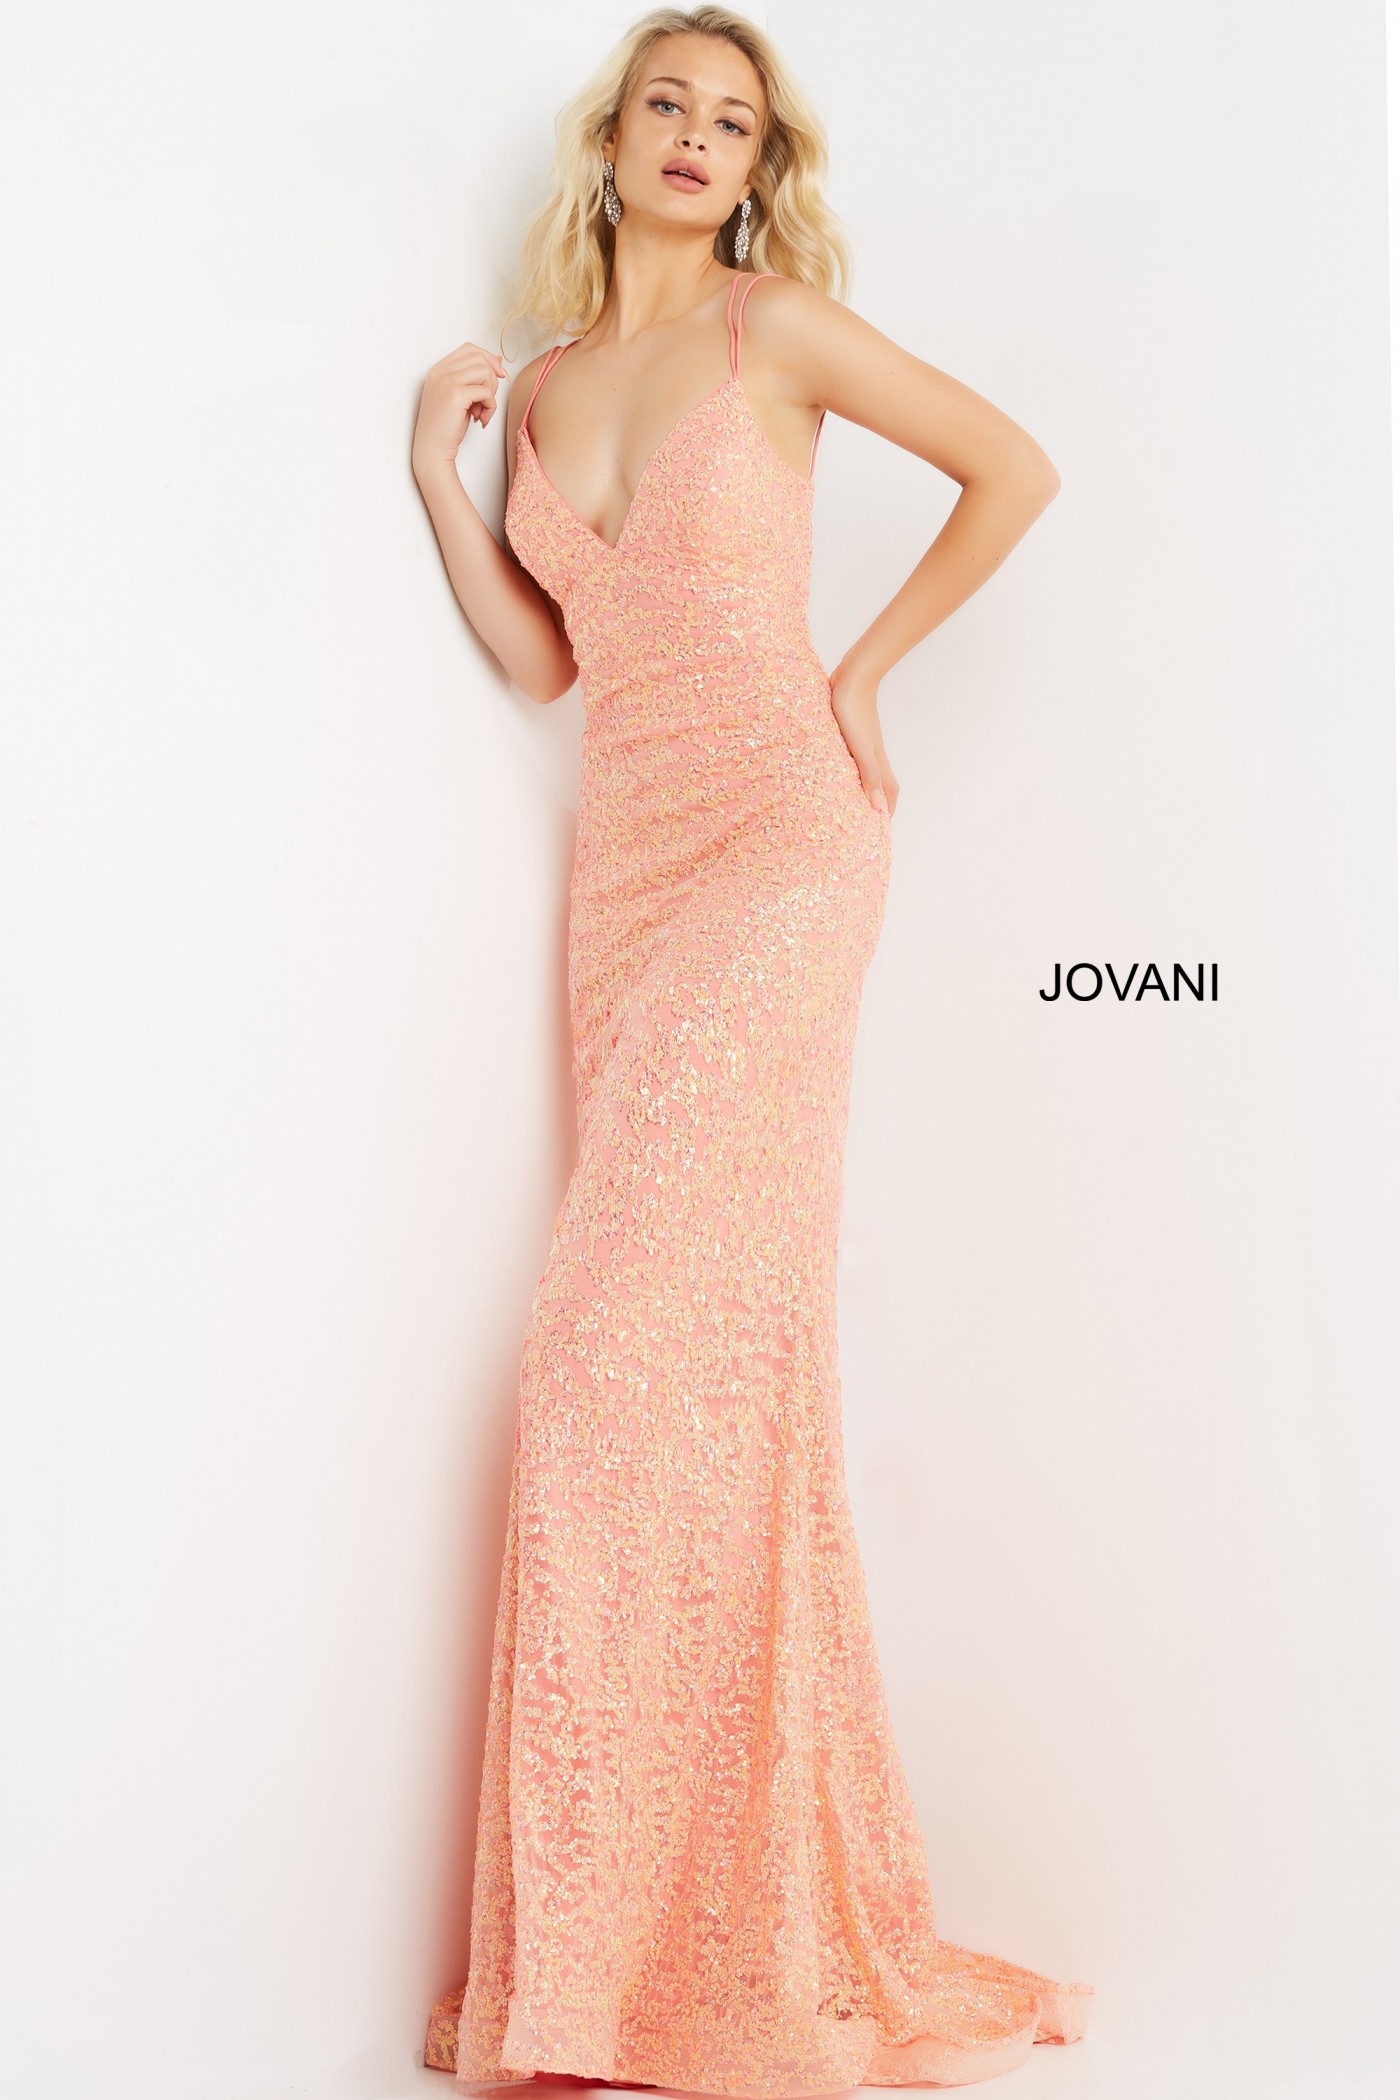 Jovani 08489 Coral Sequin Prom Dress